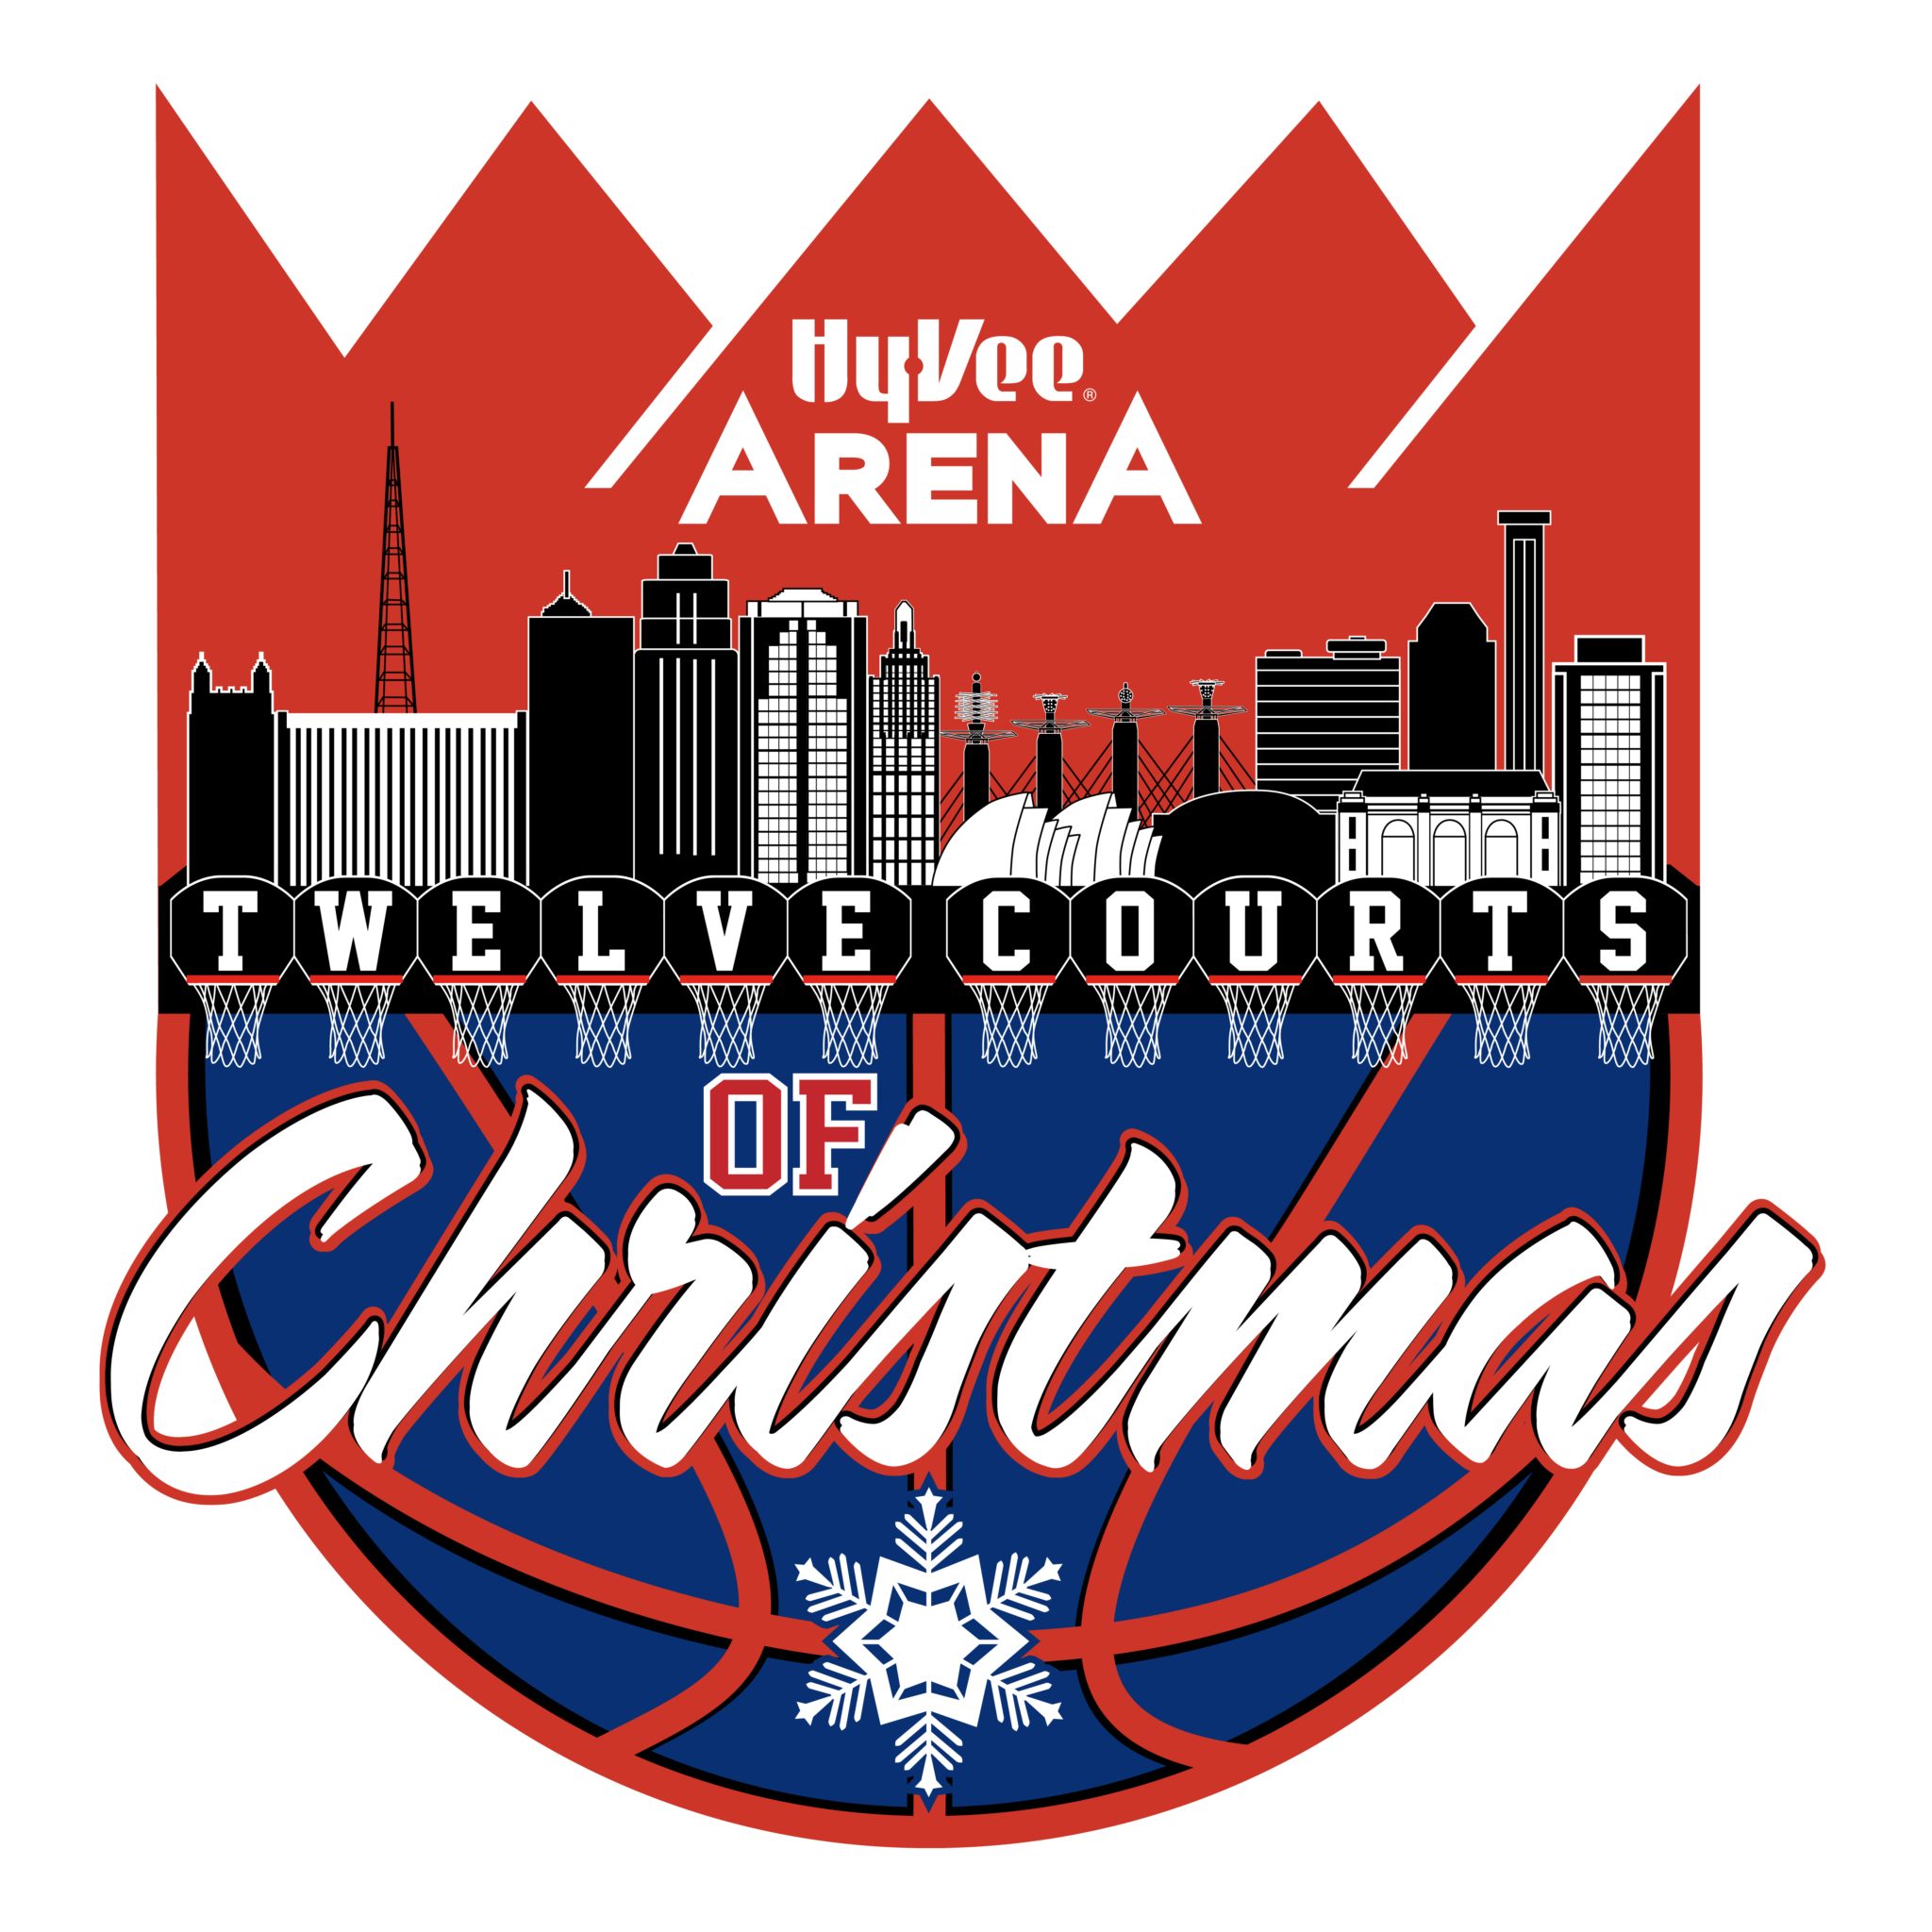 Twelve Courts of Christmas HyVee Arena